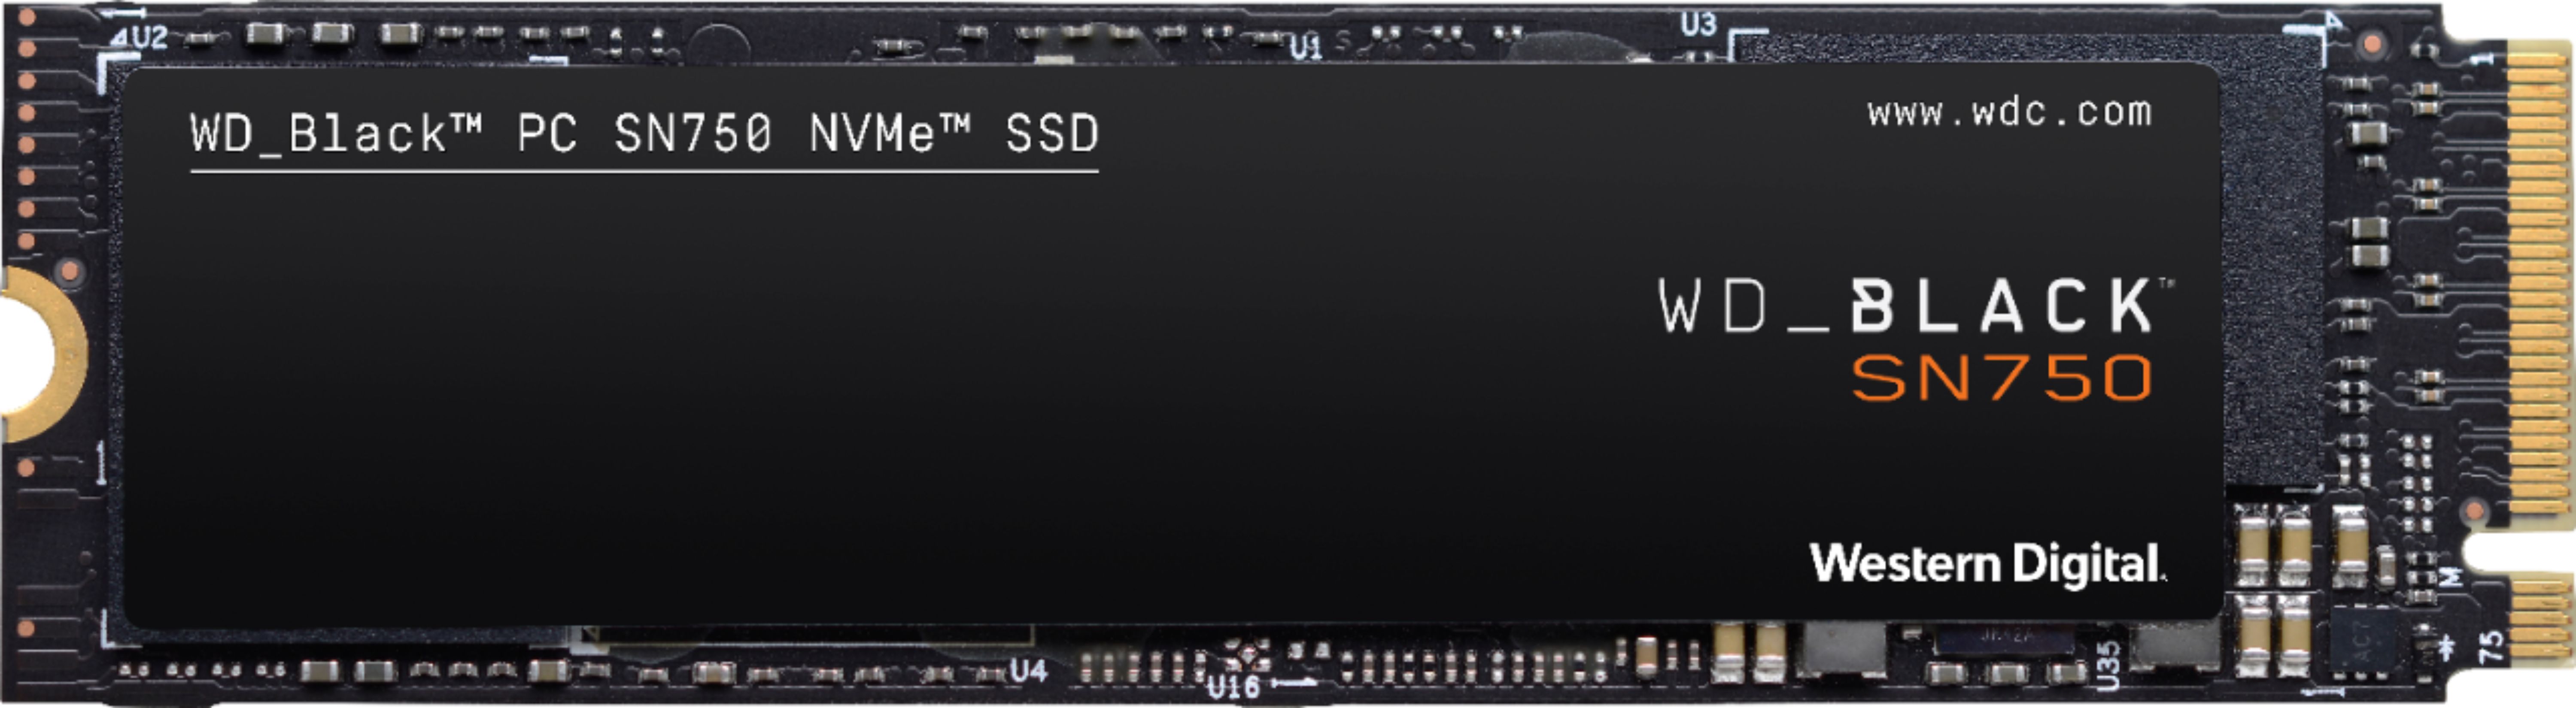 Wd Wd Black Sn750 Nvme 2tb Internal Pcie Gen 3 X 4 Solid State Drive For Laptops Desktops Wdbrpg00bnc Wrsn Best Buy